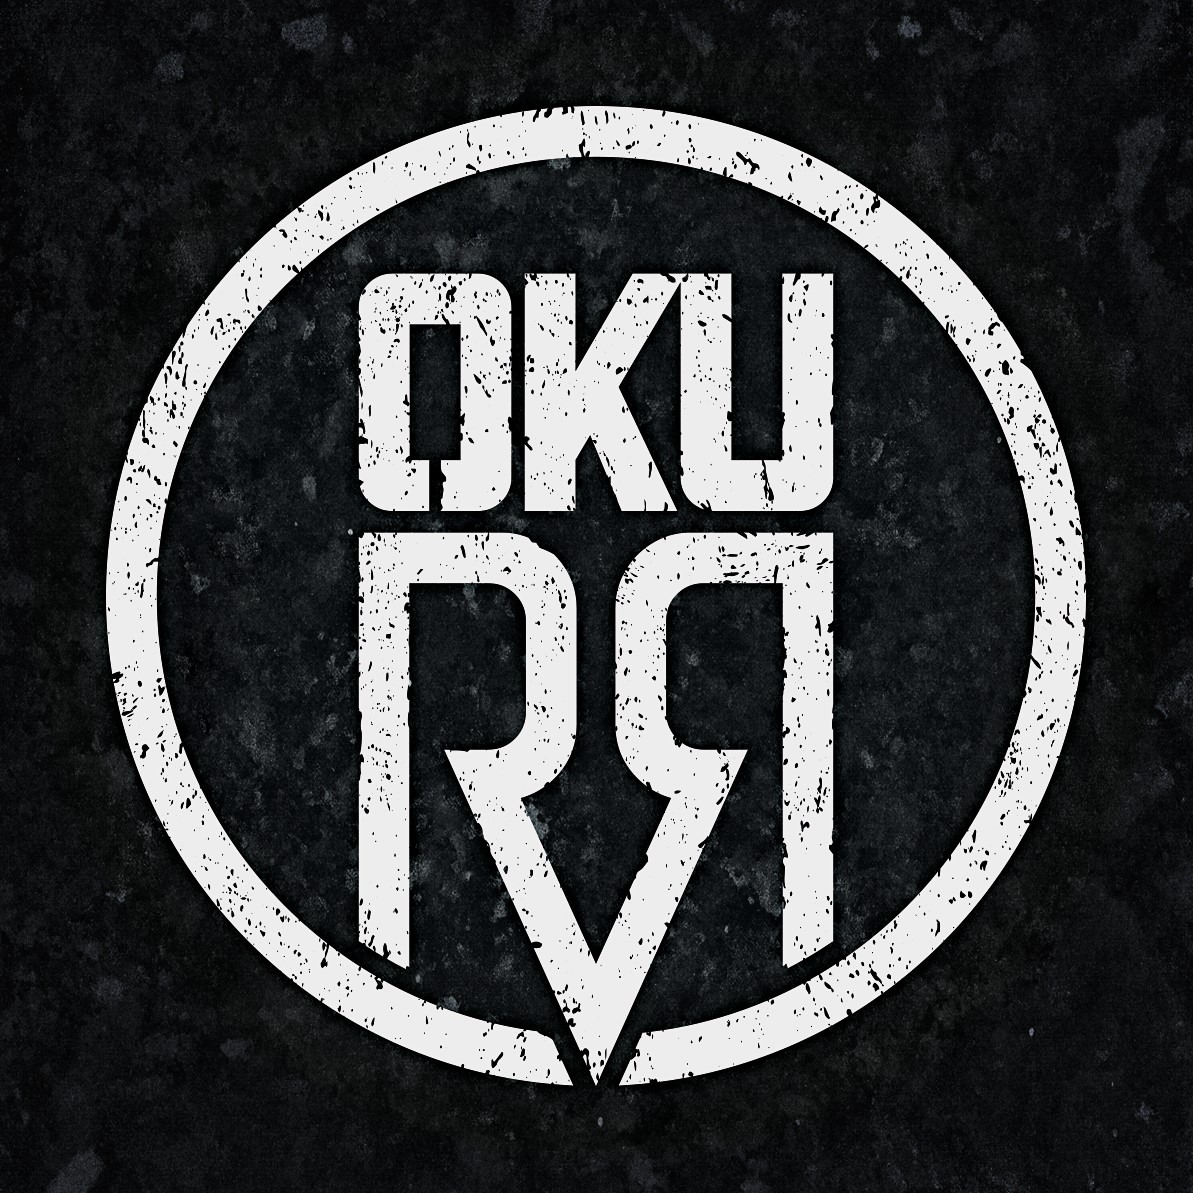 Oku and the reggea rockers